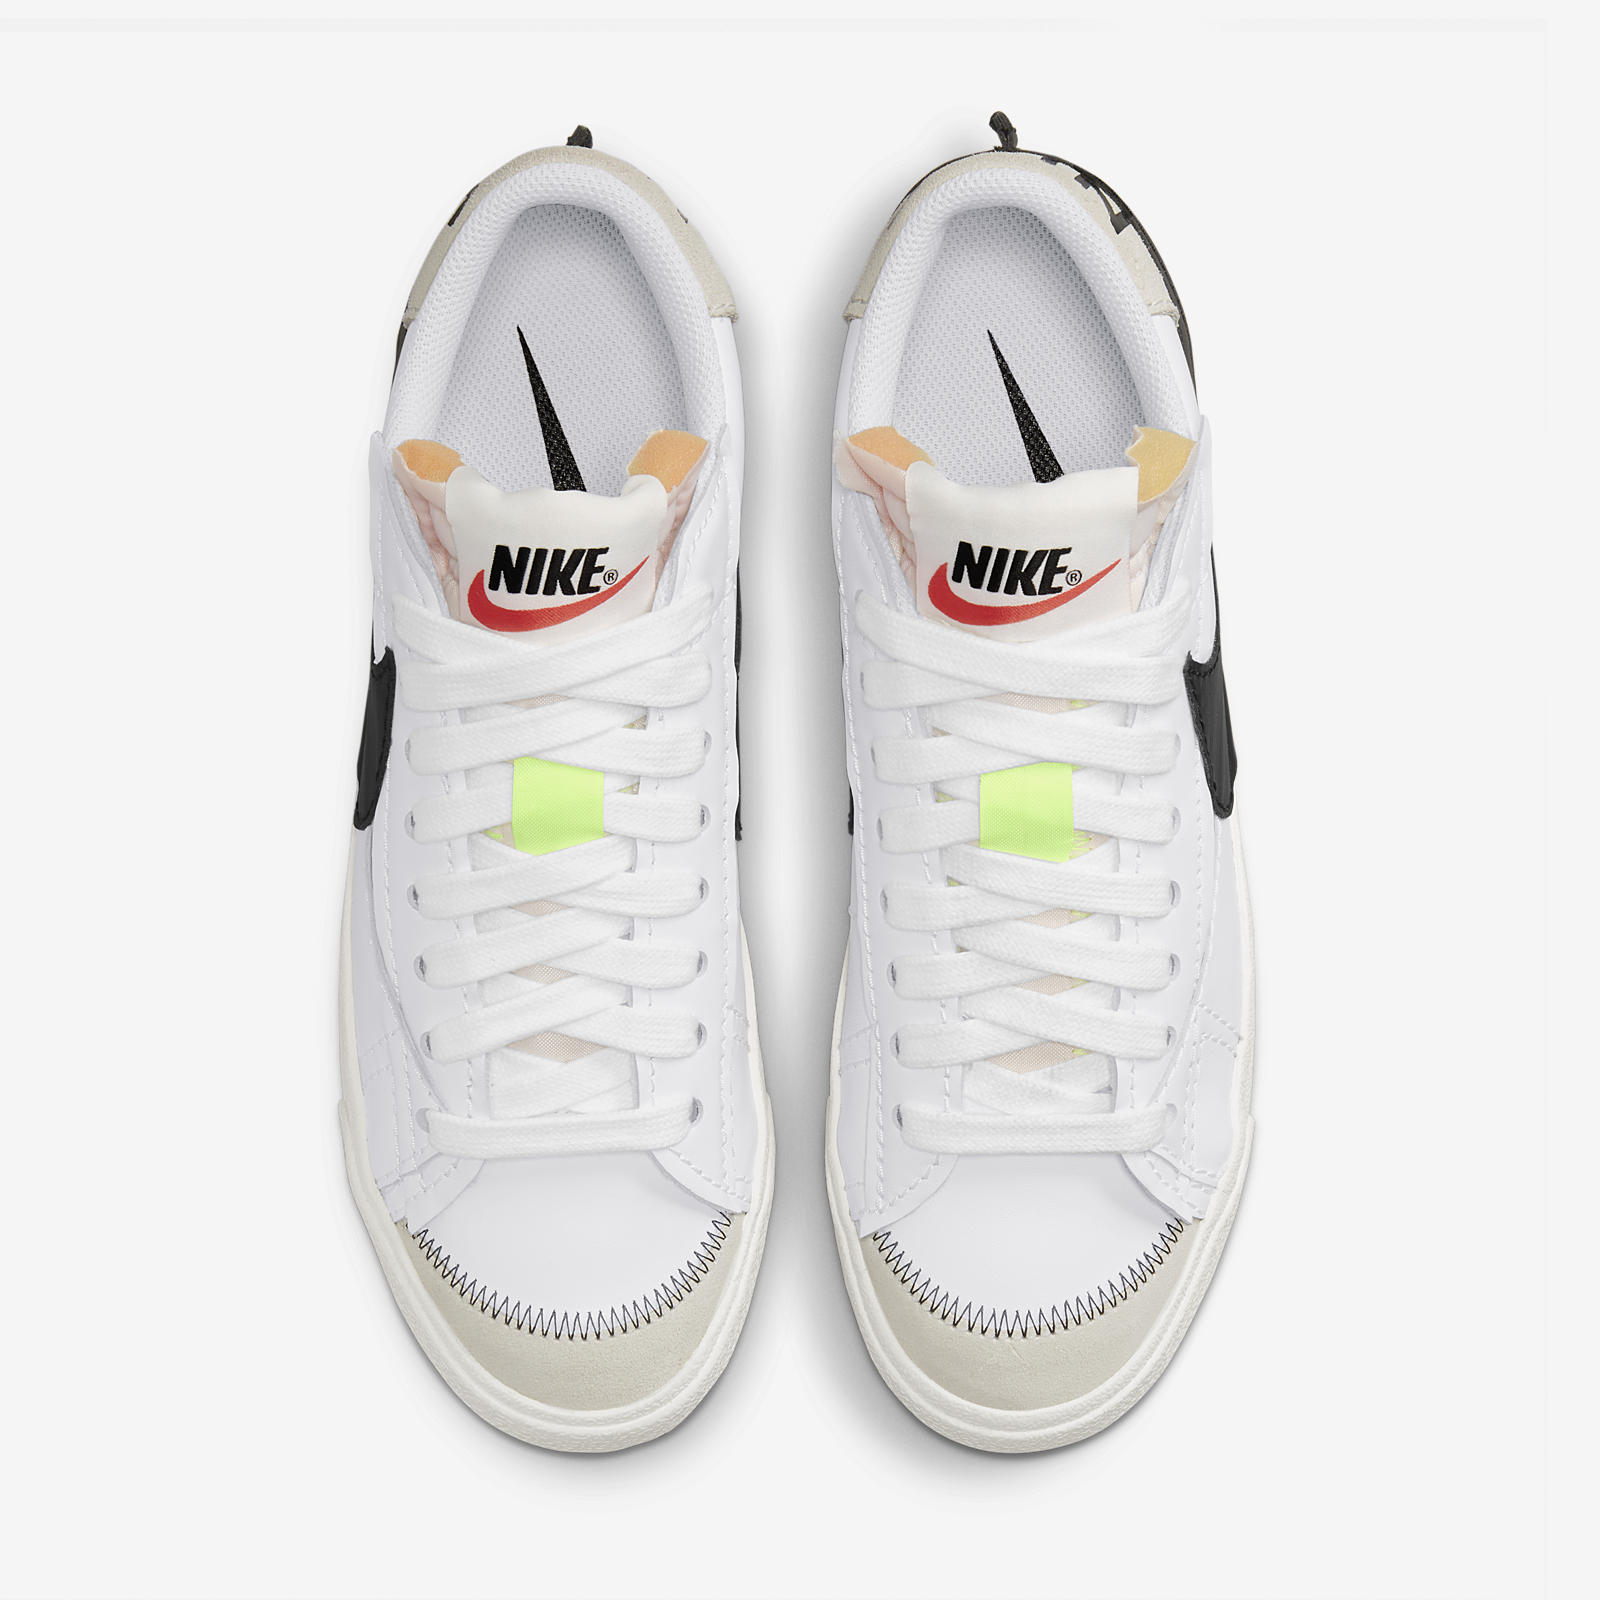 Nike Blazer Low Jumbo
White / Black